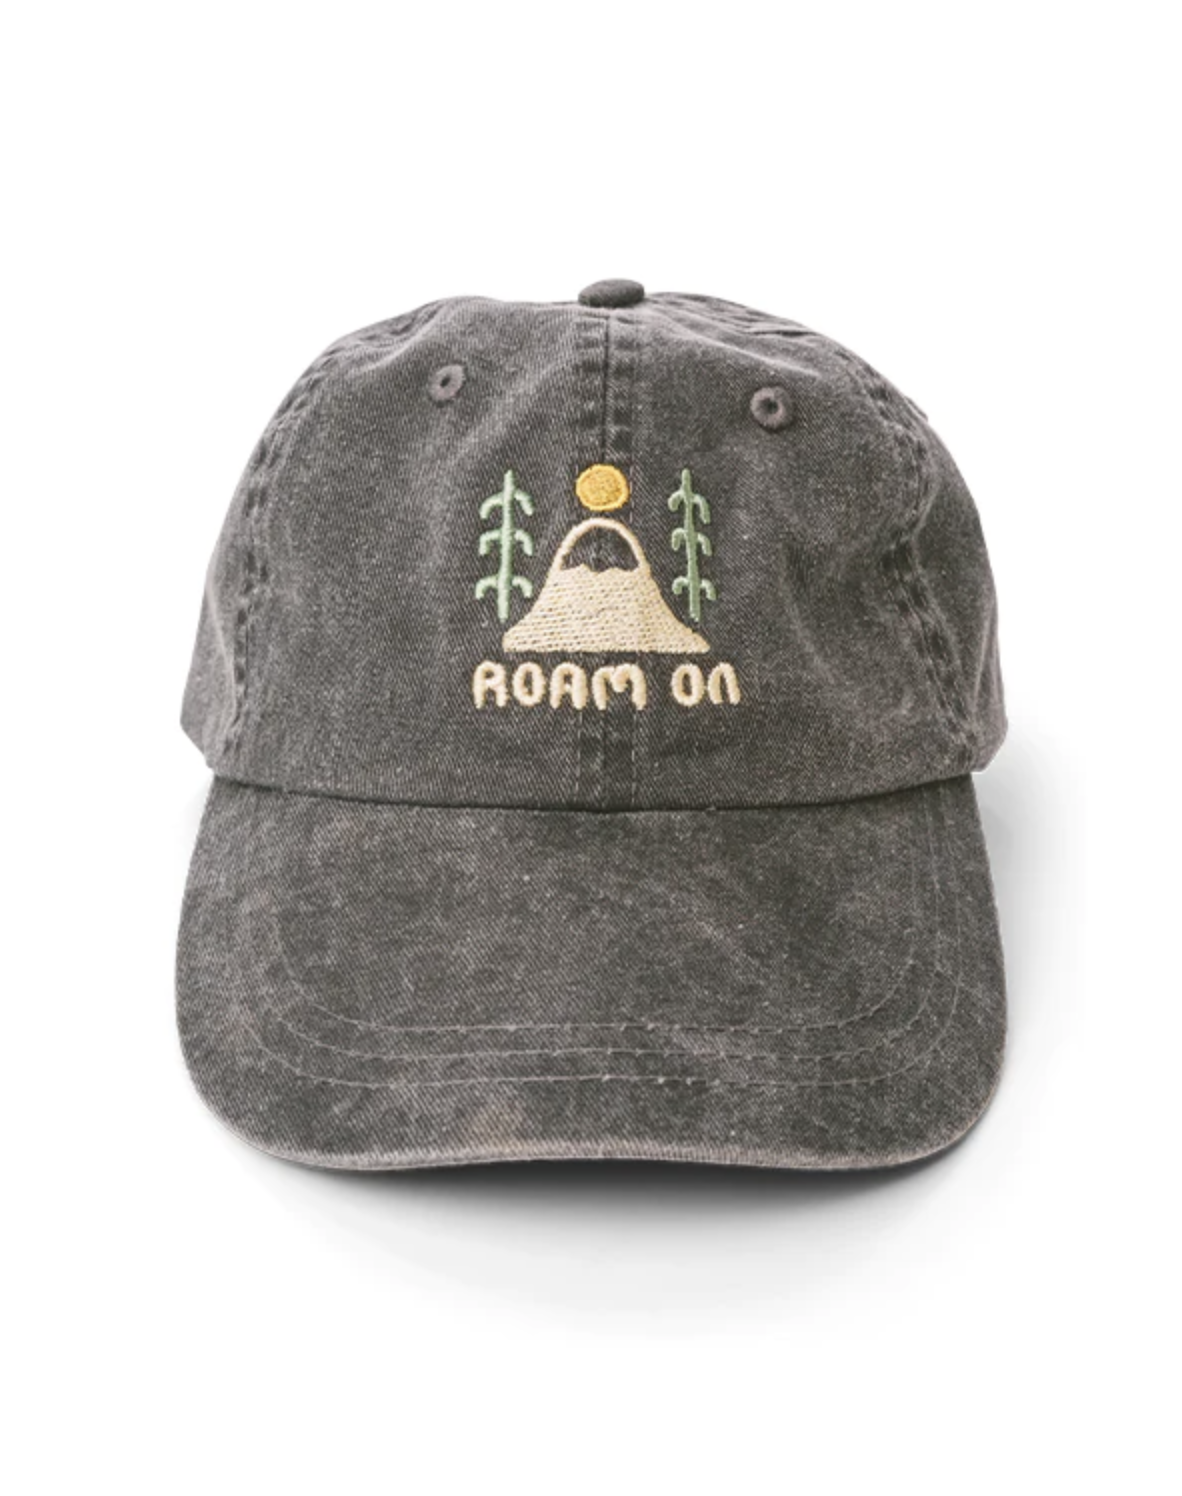 Roam On Summit Hat